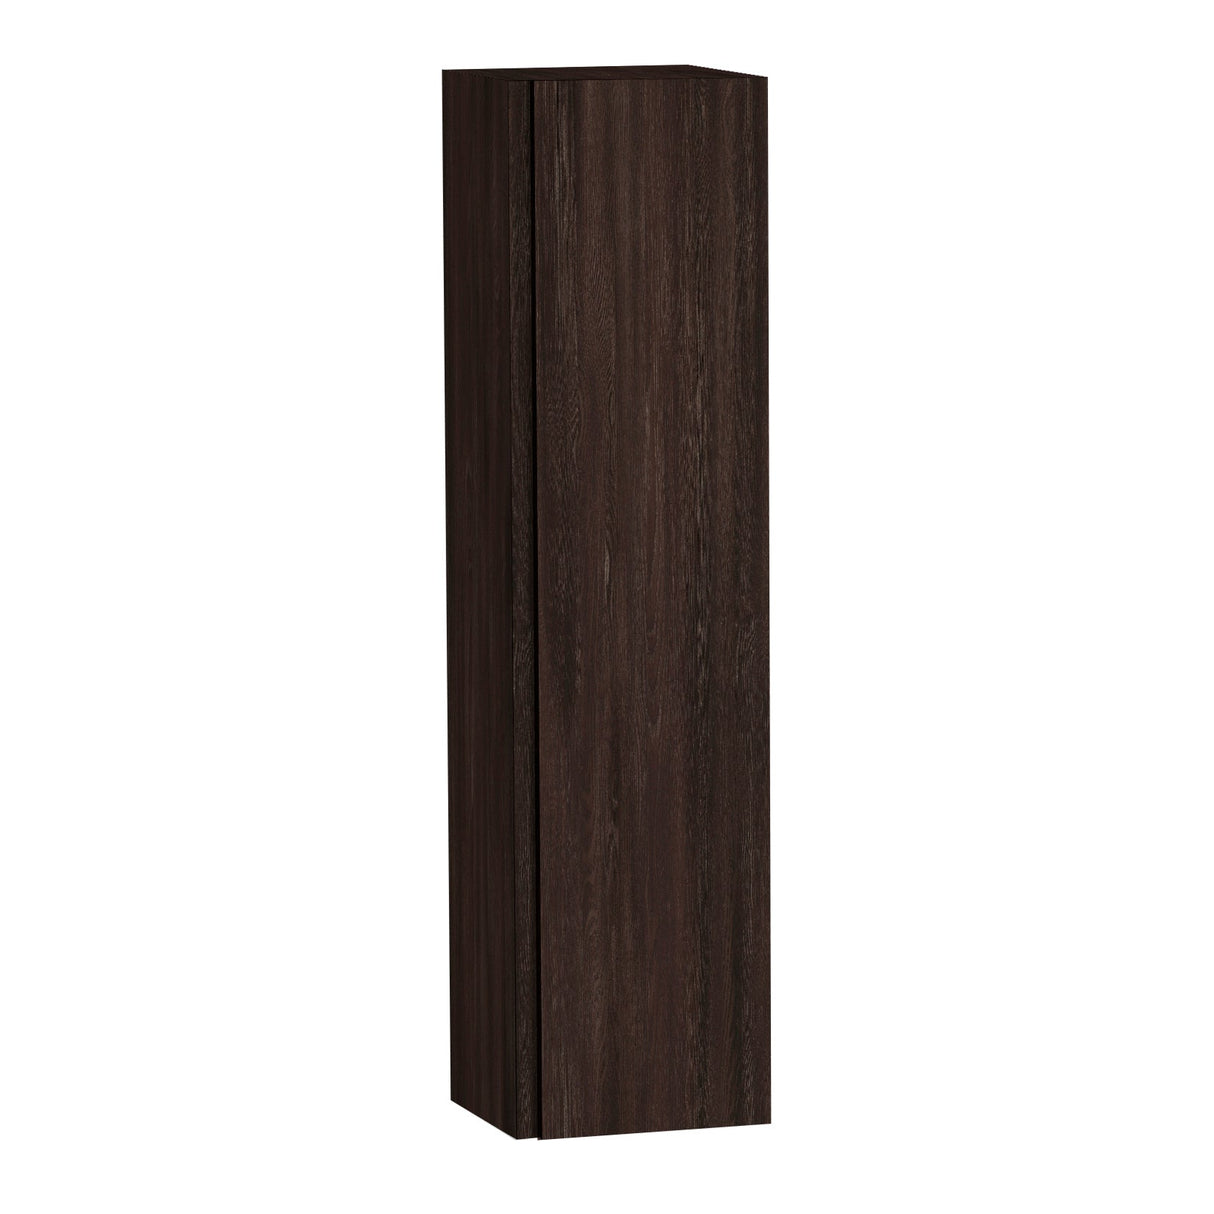 DAX Pasadena Engineered Wood Side Cabinet, 55", Wenge DAX-PAS055513